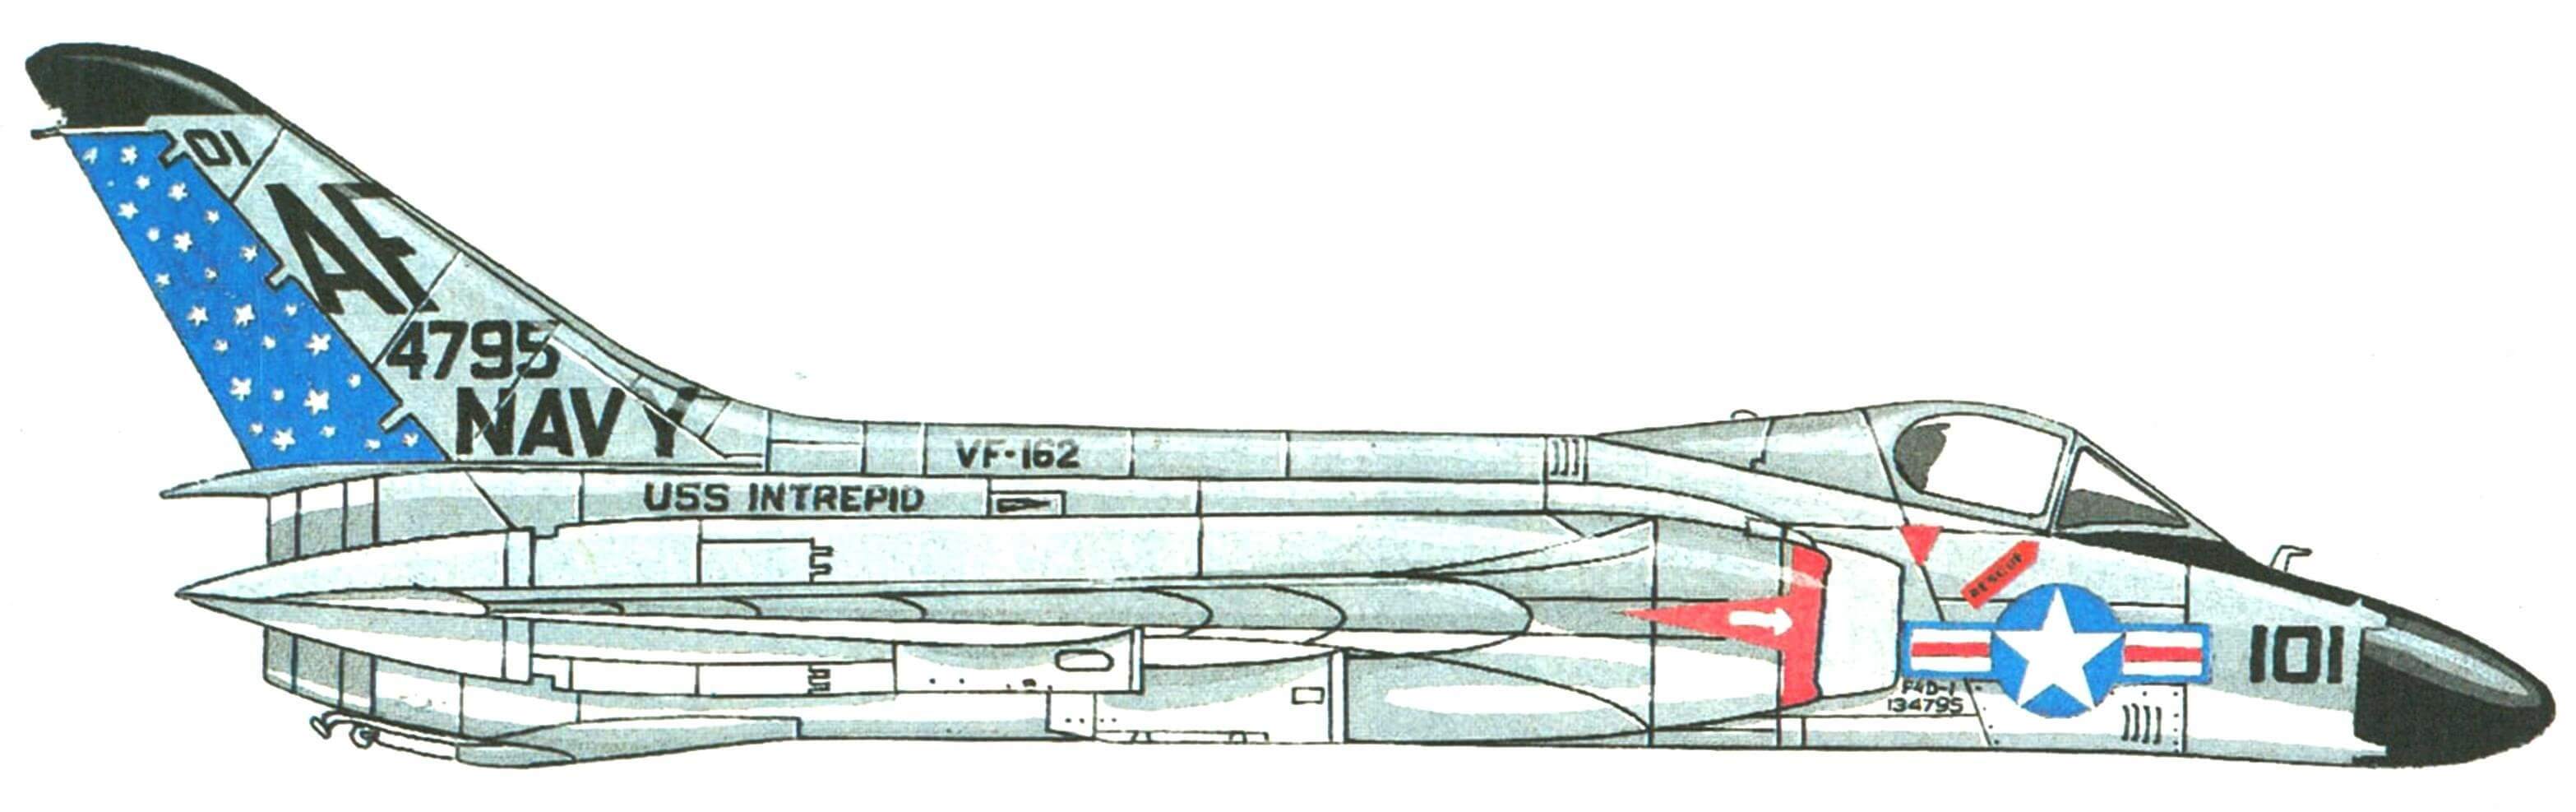 DOUGLAS F4D-1 (F-6A) «SKYRAY». Эскадрилья VF-162, авианосец Intrepid, 1957г.